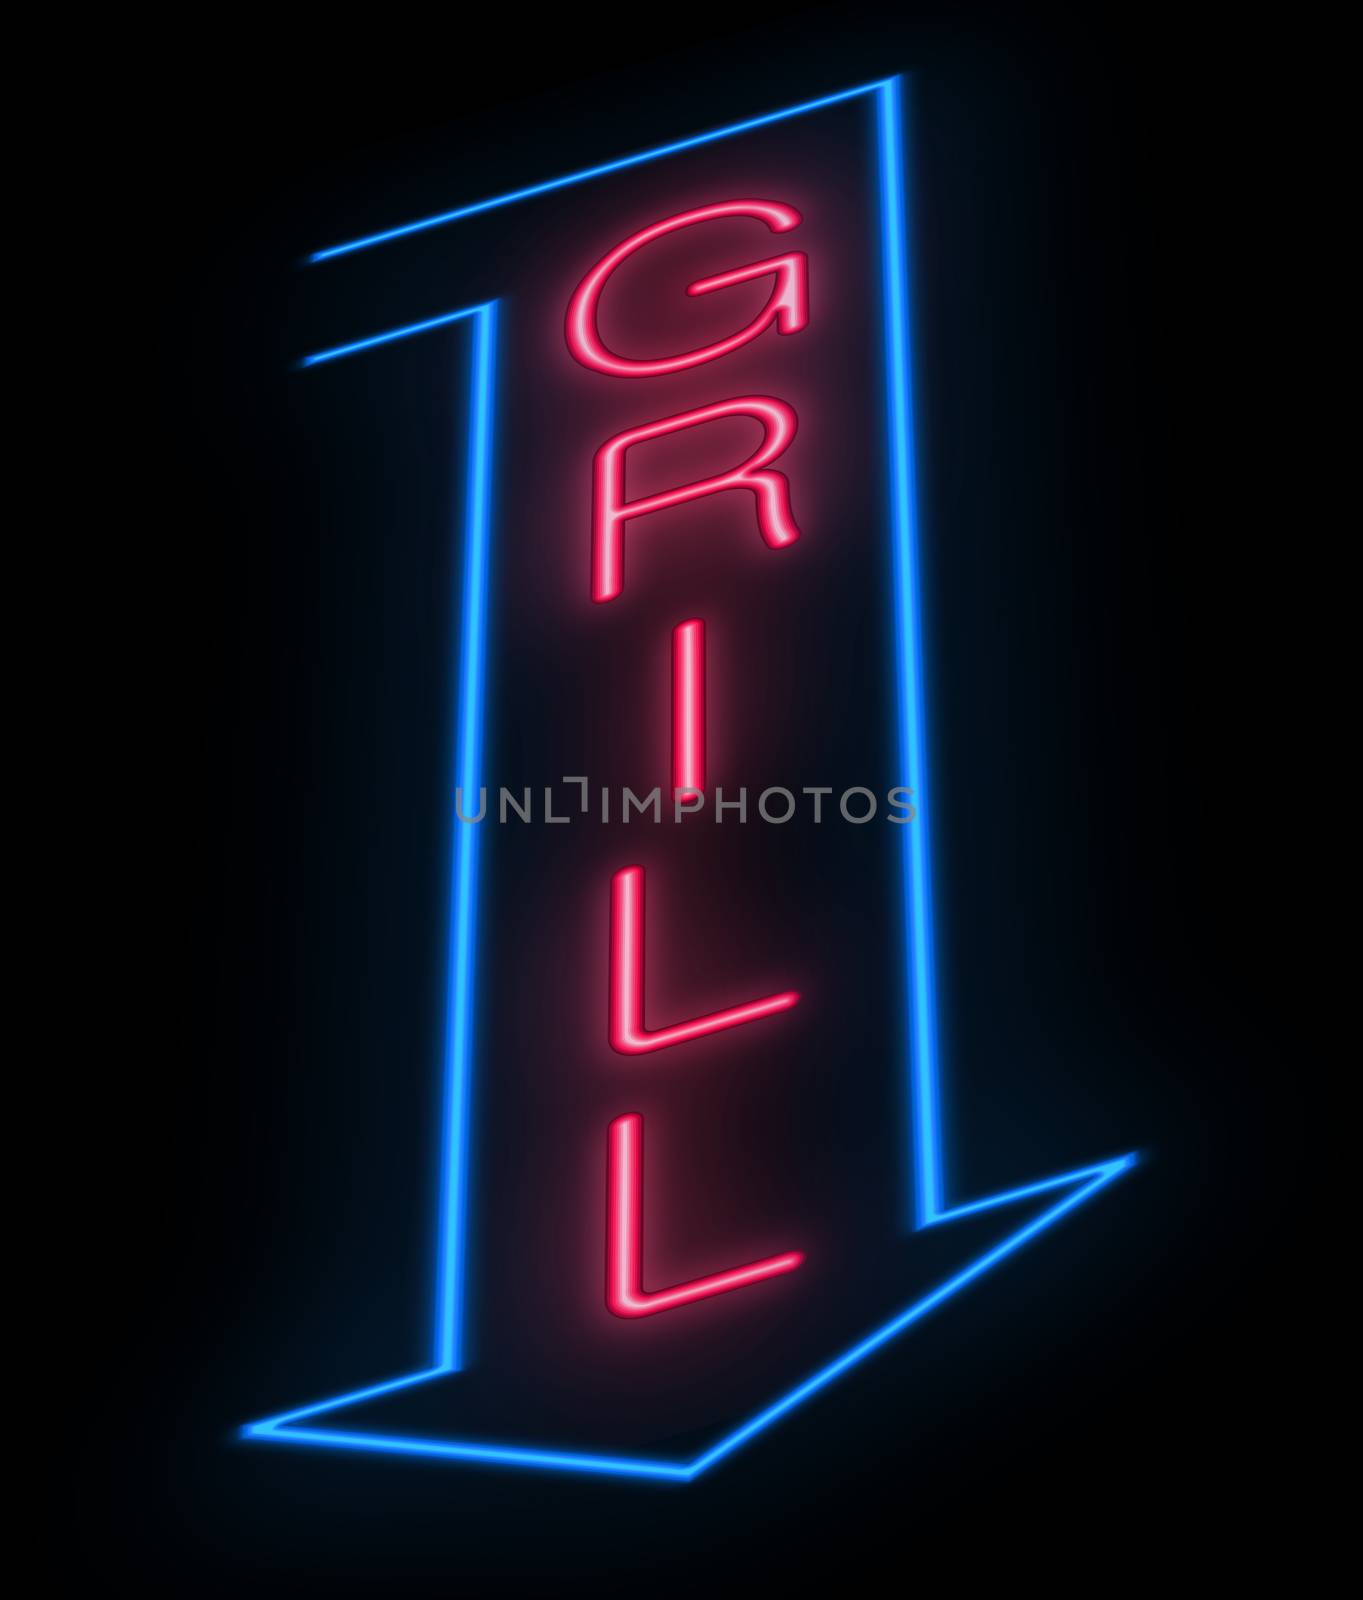 Illustration depicting an illuminated neon grill sign.